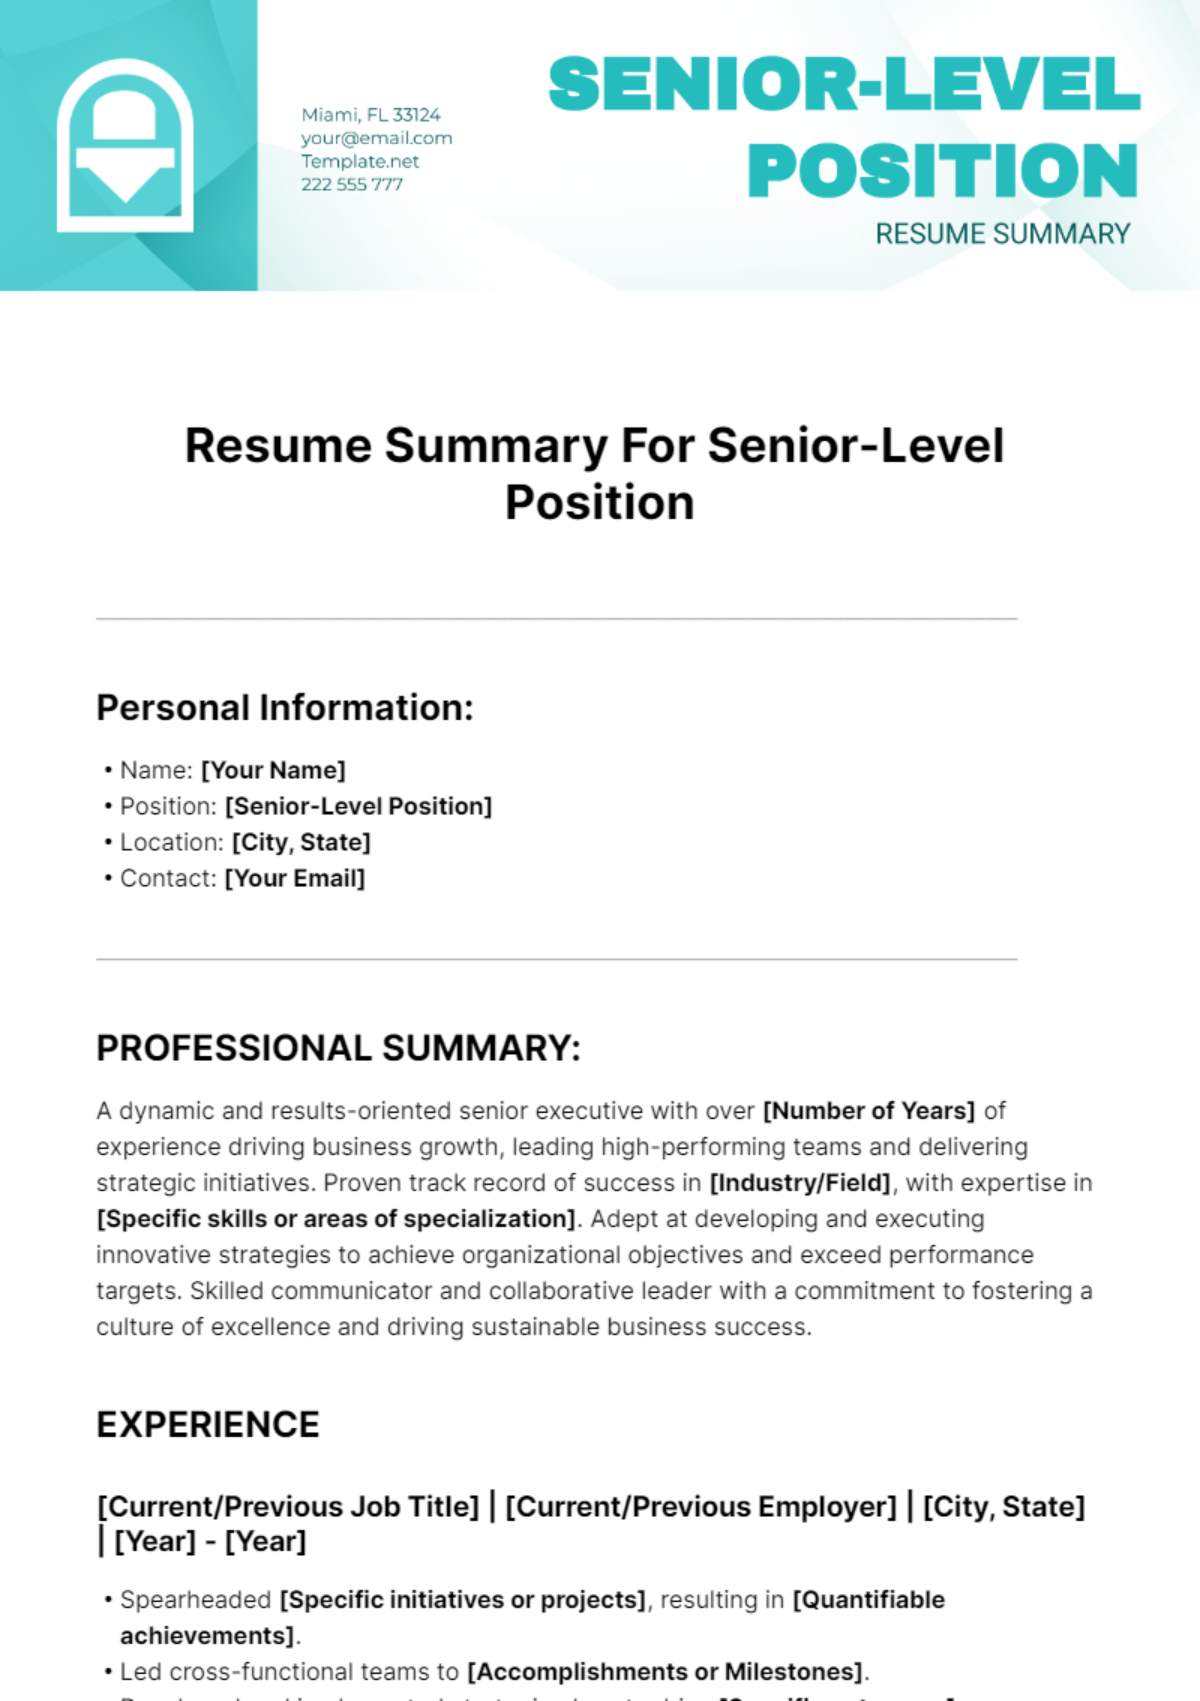 Resume Summary For Senior-Level Position Template